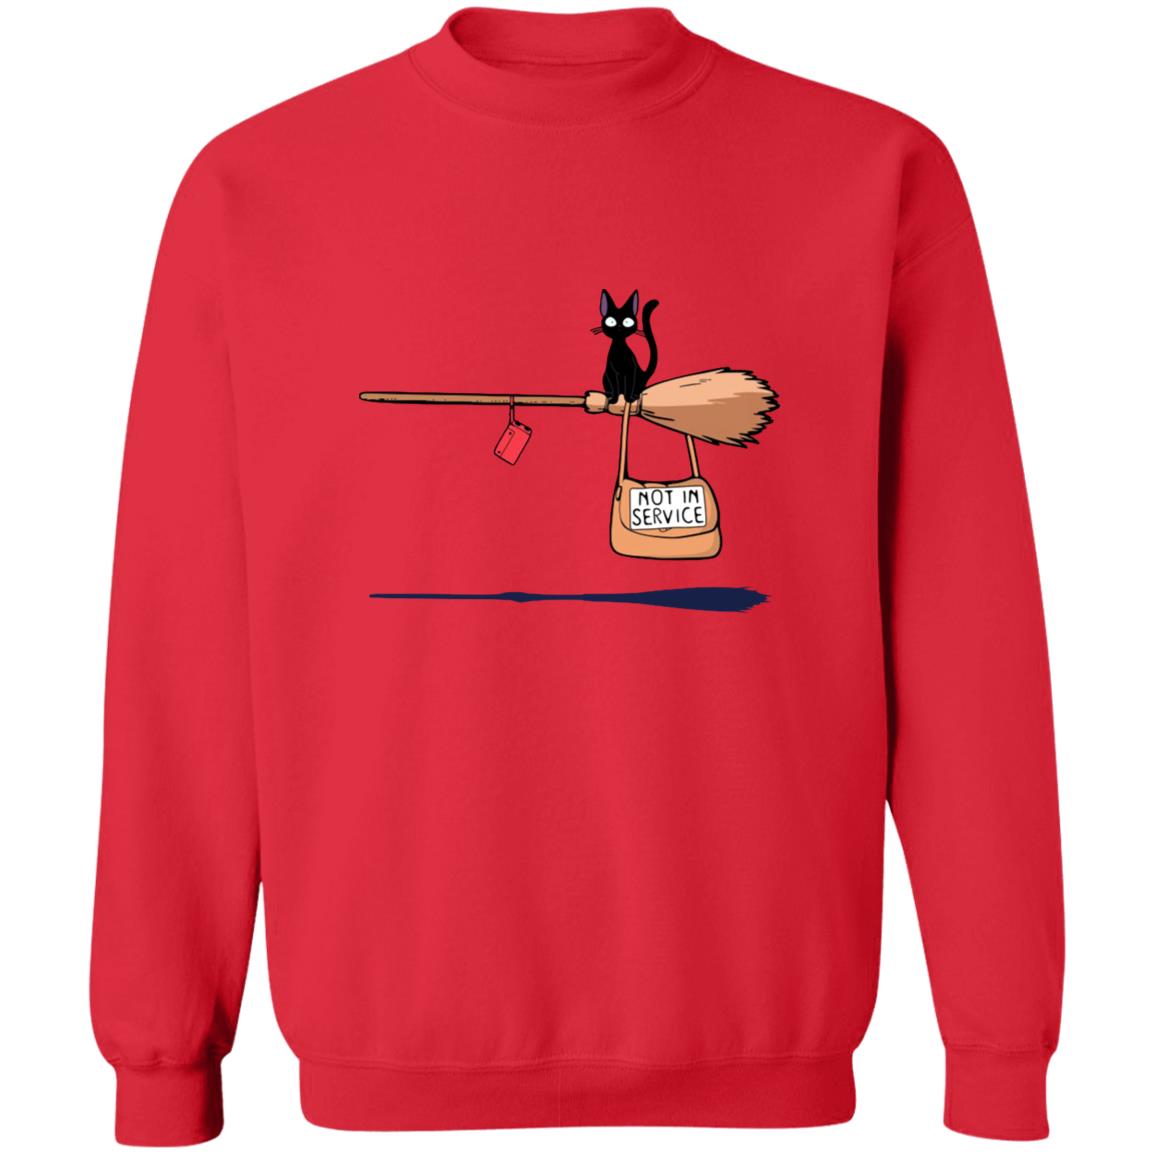 Kiki’s Delivery Service – Not in Service Sweatshirt